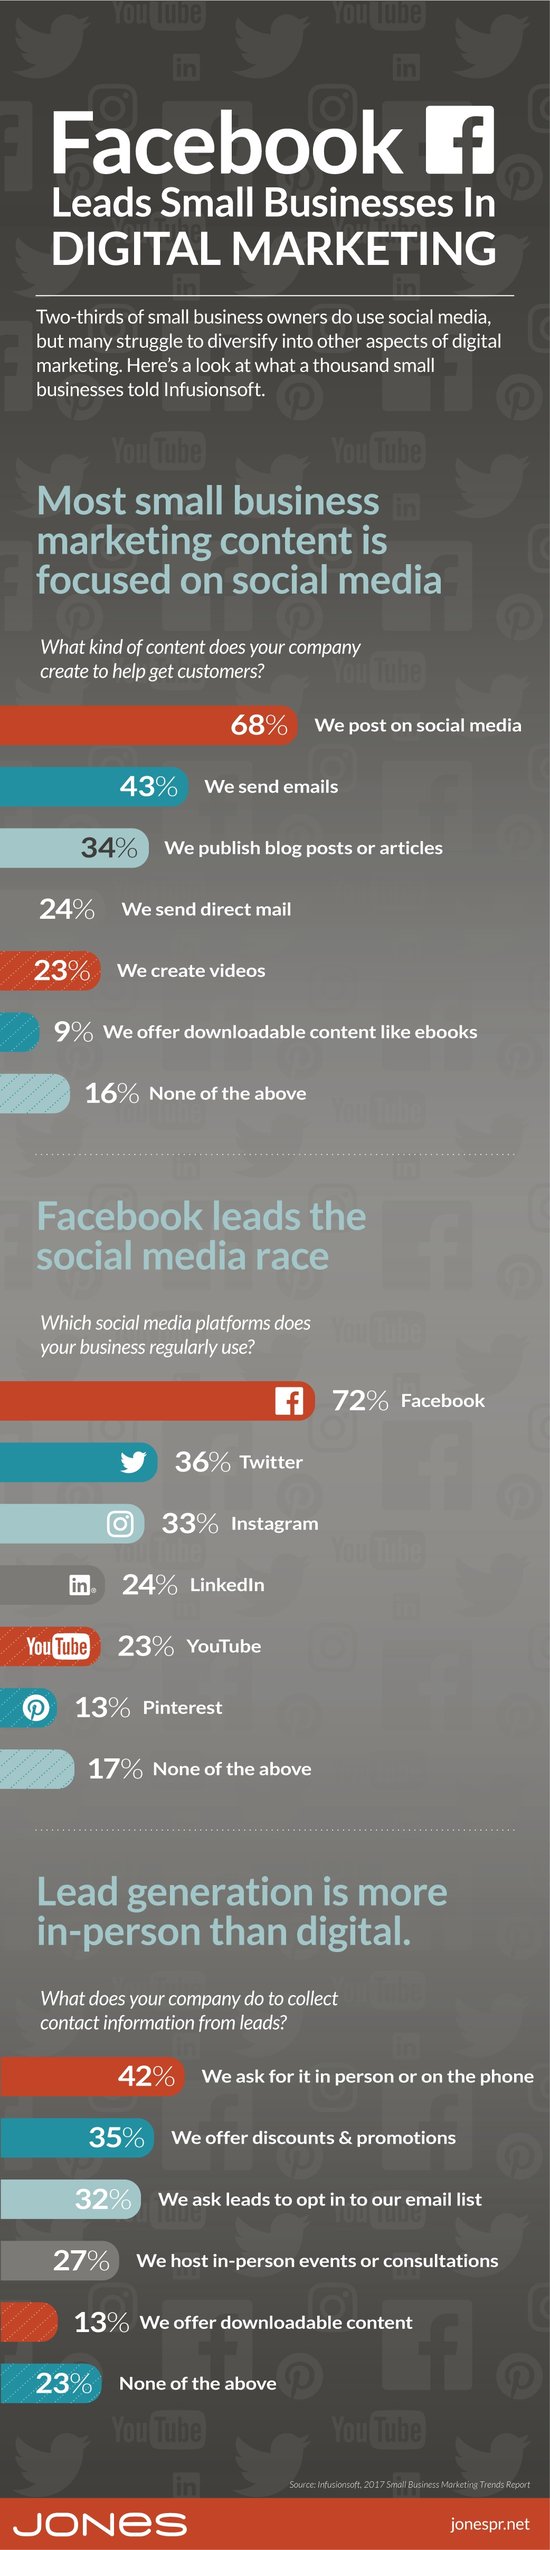 jones-infographic-small-business-social-content.jpg